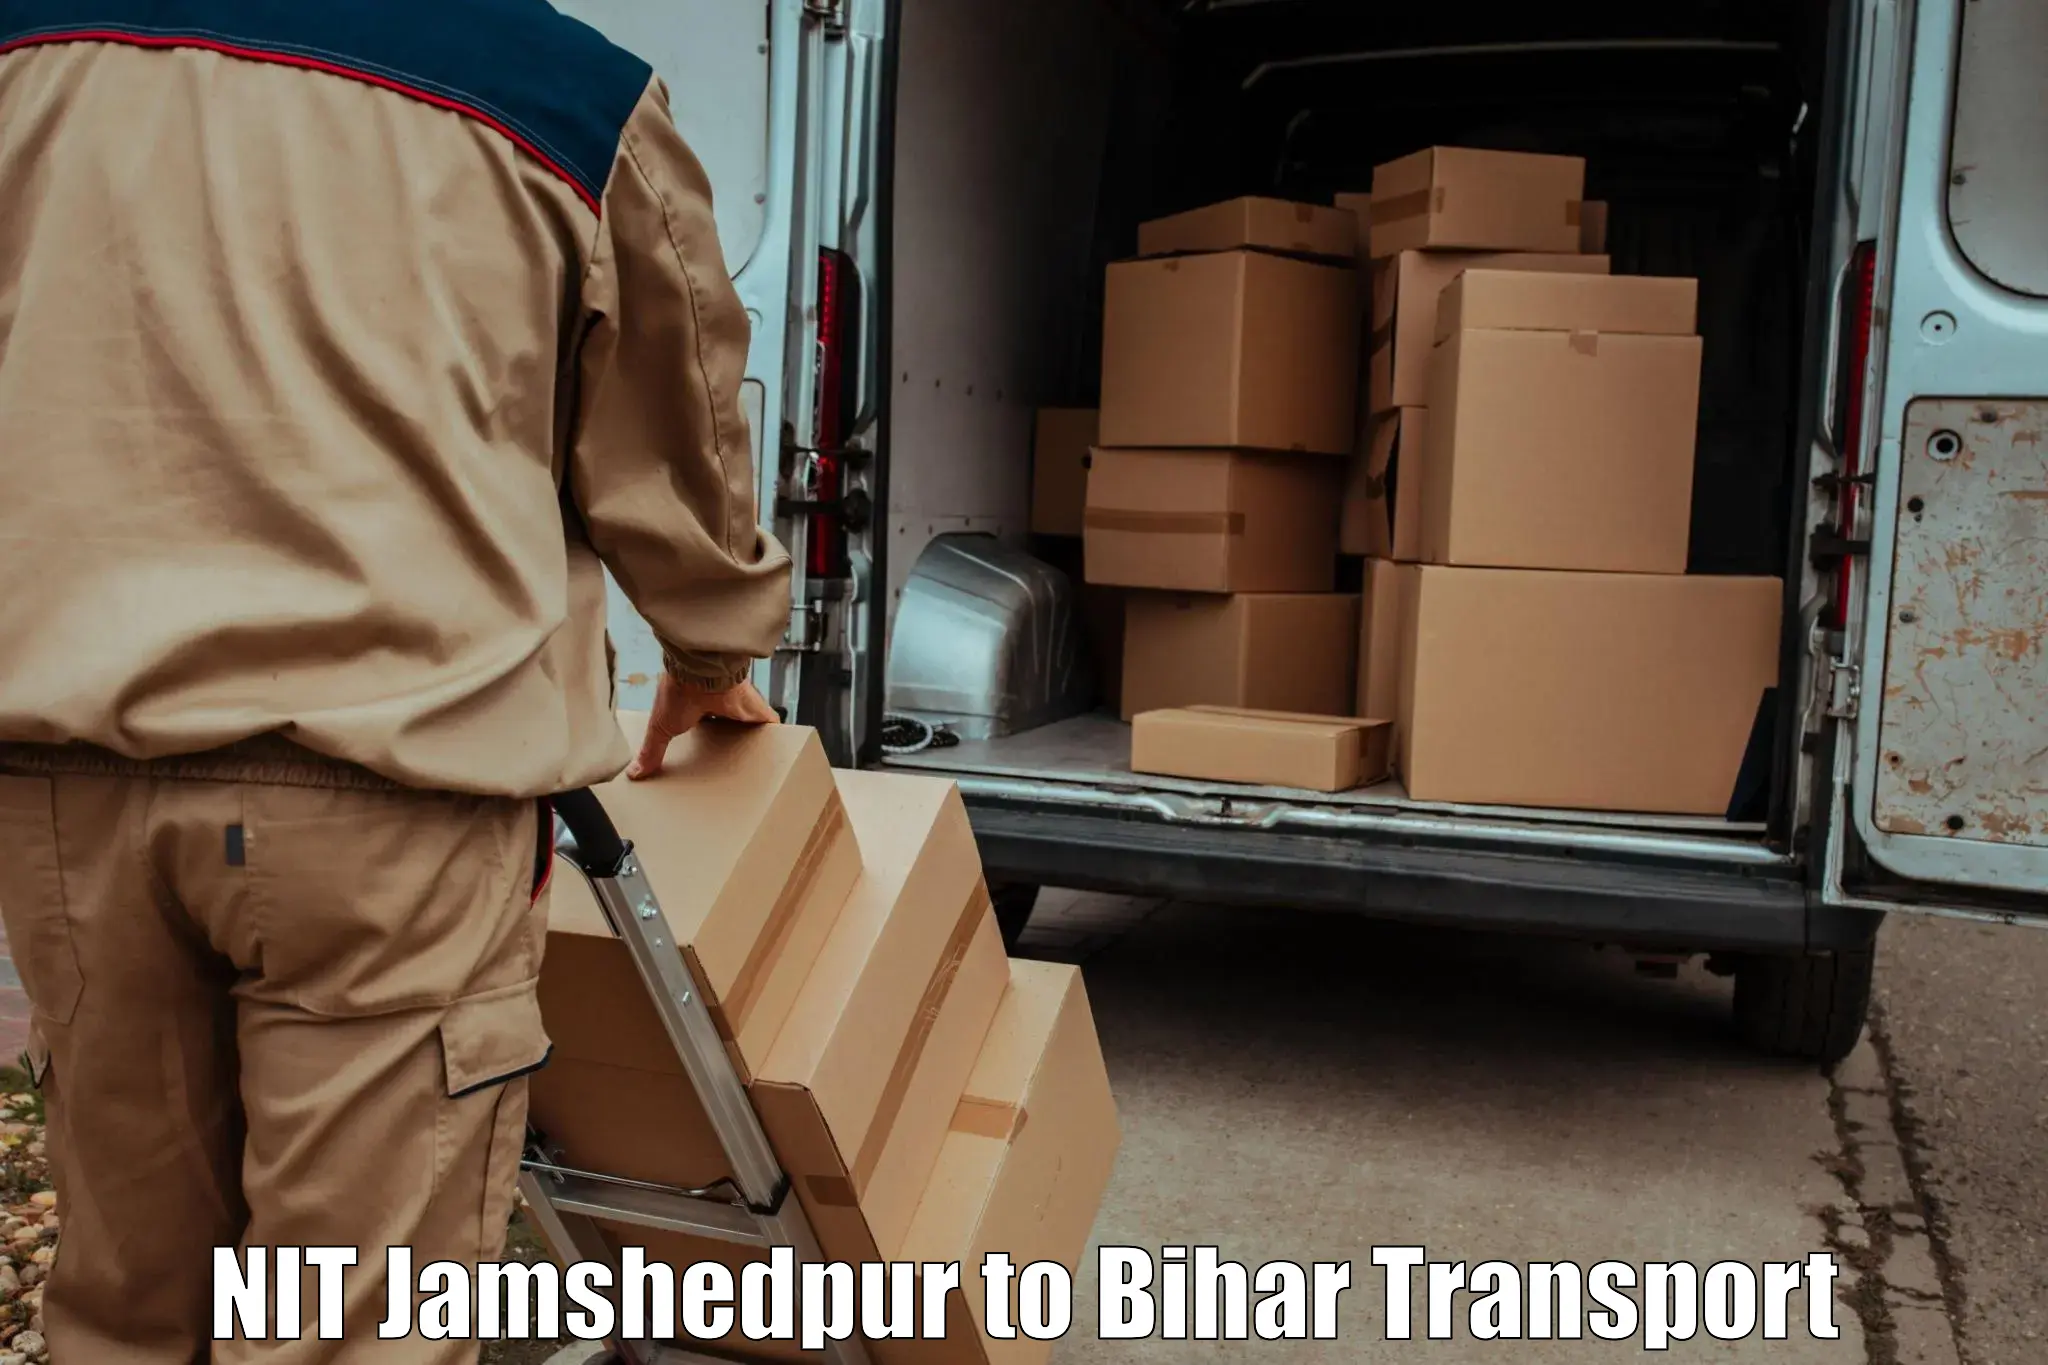 Nearest transport service NIT Jamshedpur to Aurangabad Bihar